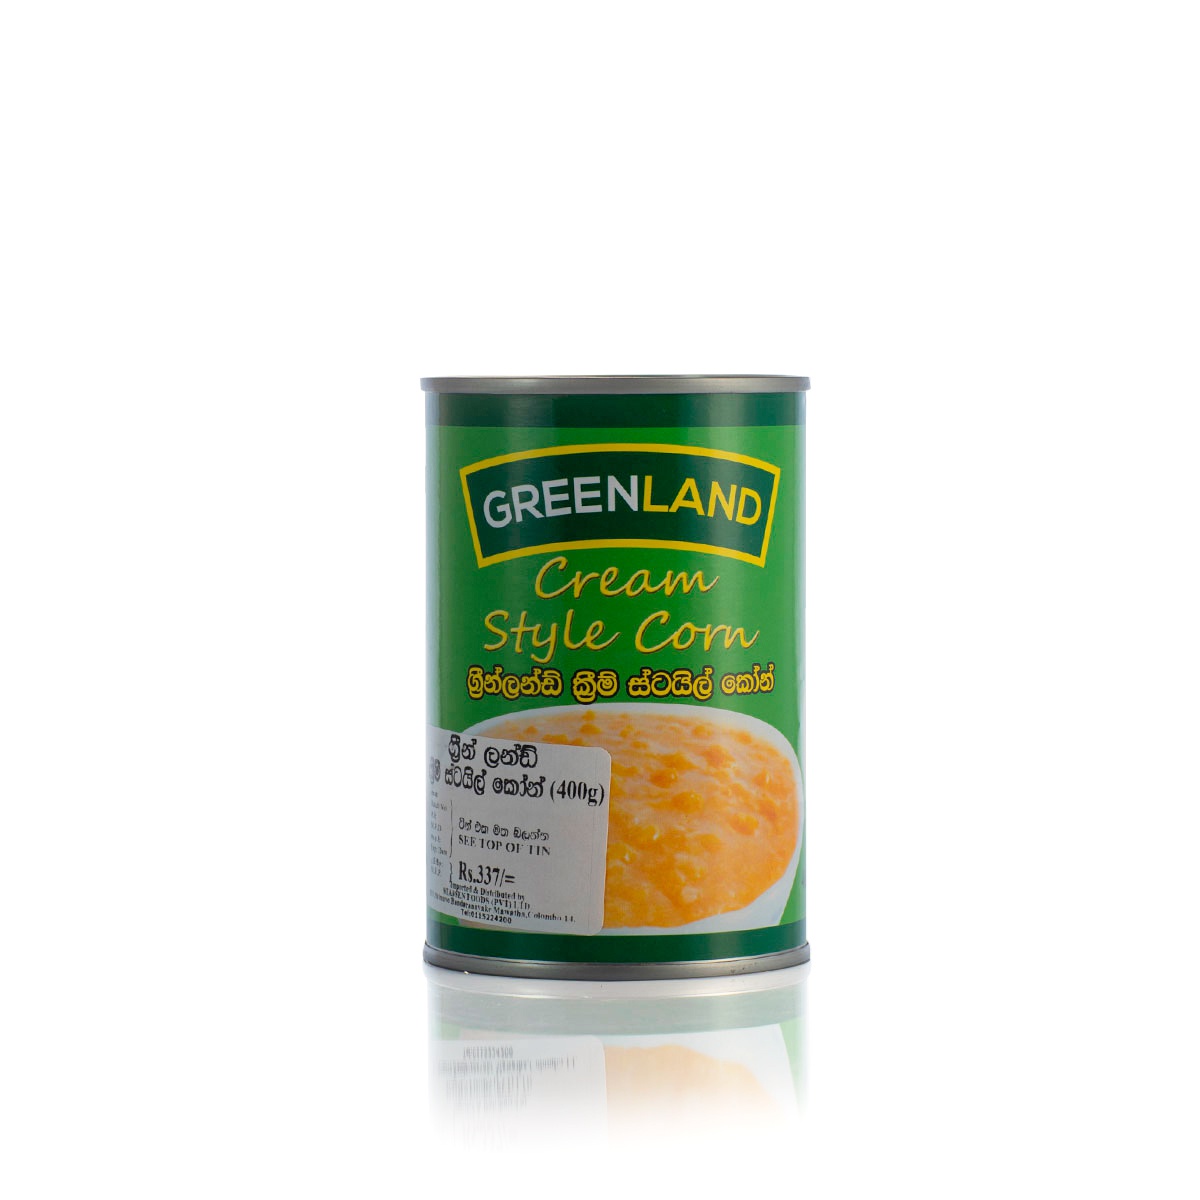 Greenland Cream Style Corn 400g - GREENLAND - Processed/ Preserved Vegetables - in Sri Lanka